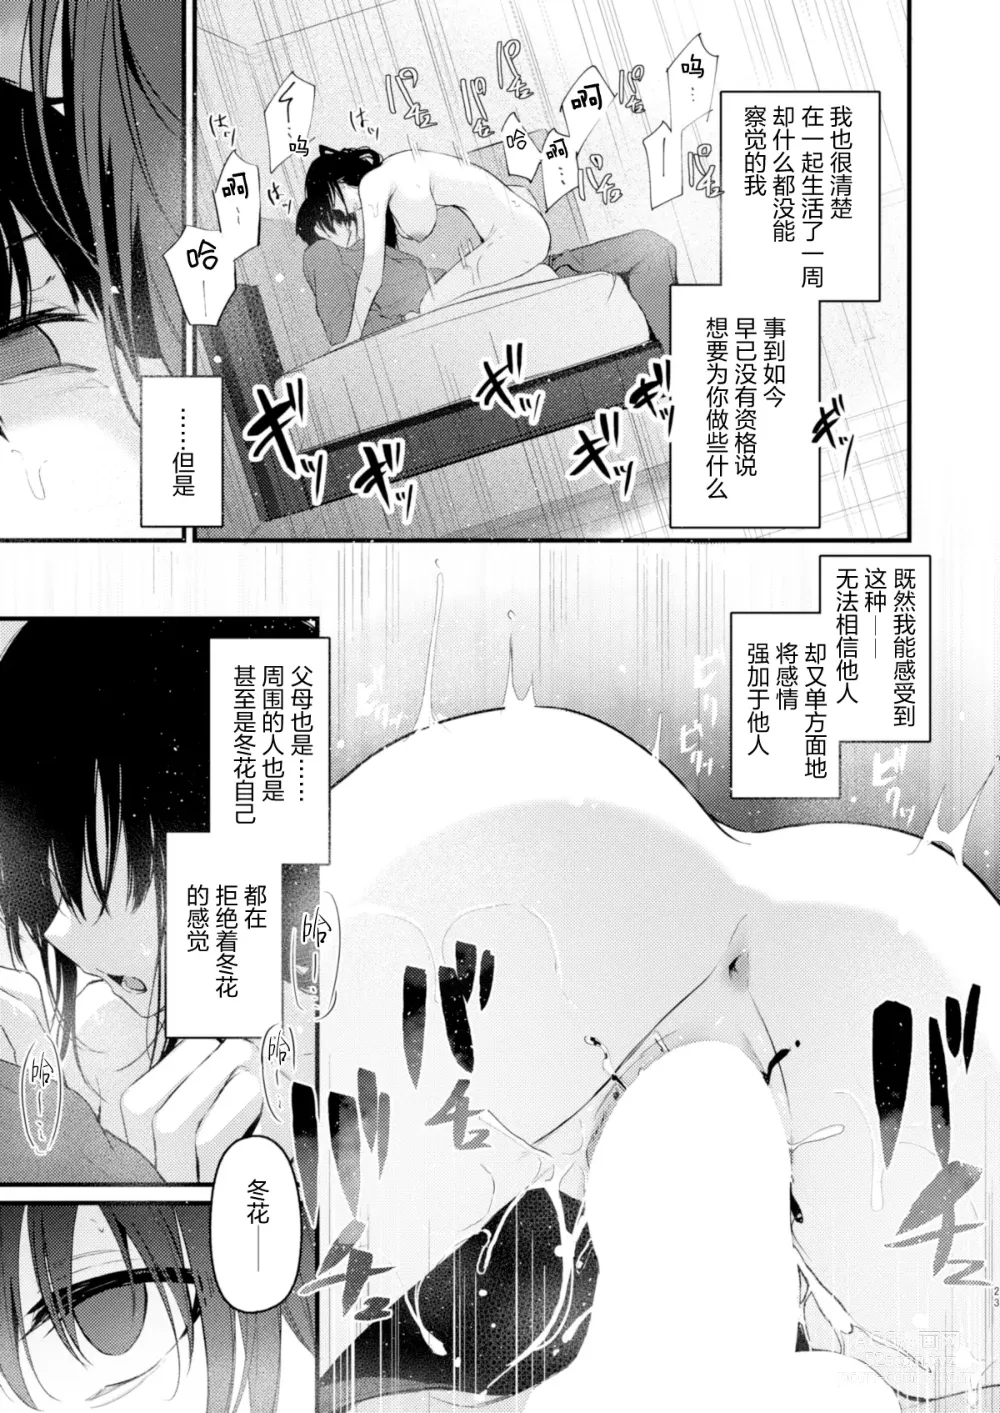 Page 25 of doujinshi PULCHRE BENE RECTE!